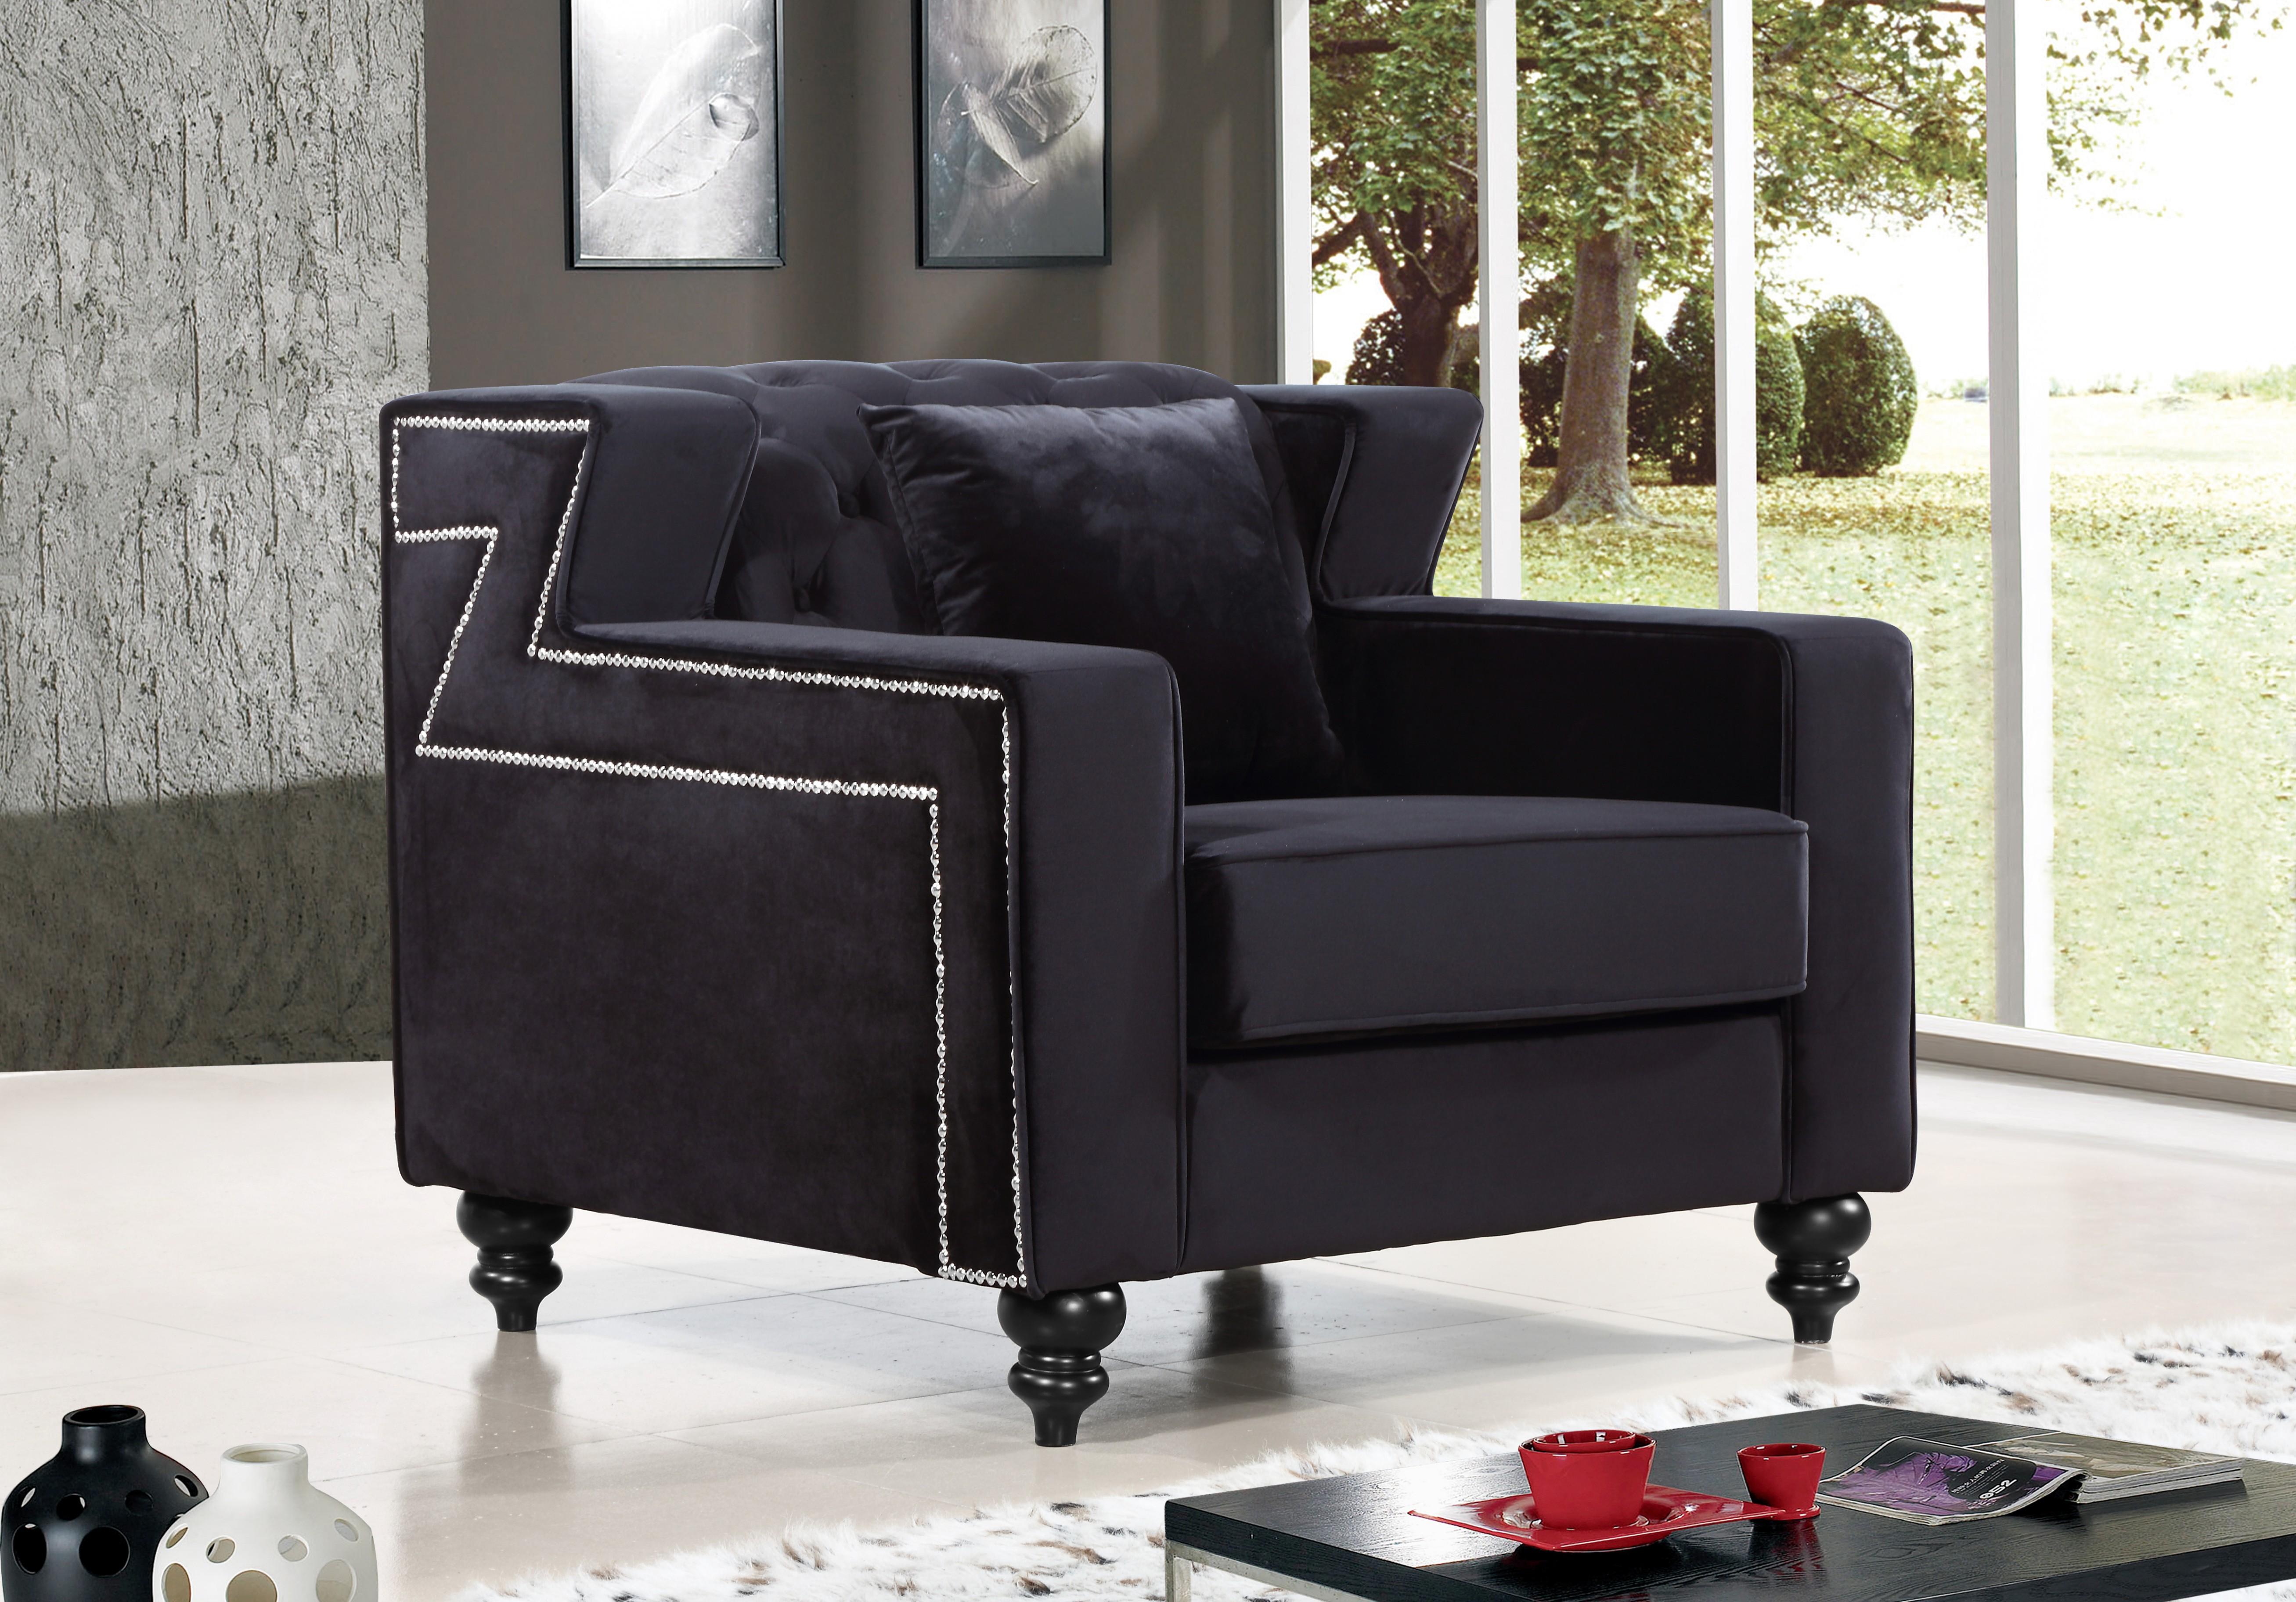 

    
616 Harley Black Sofa Loveseat and Chair Set
